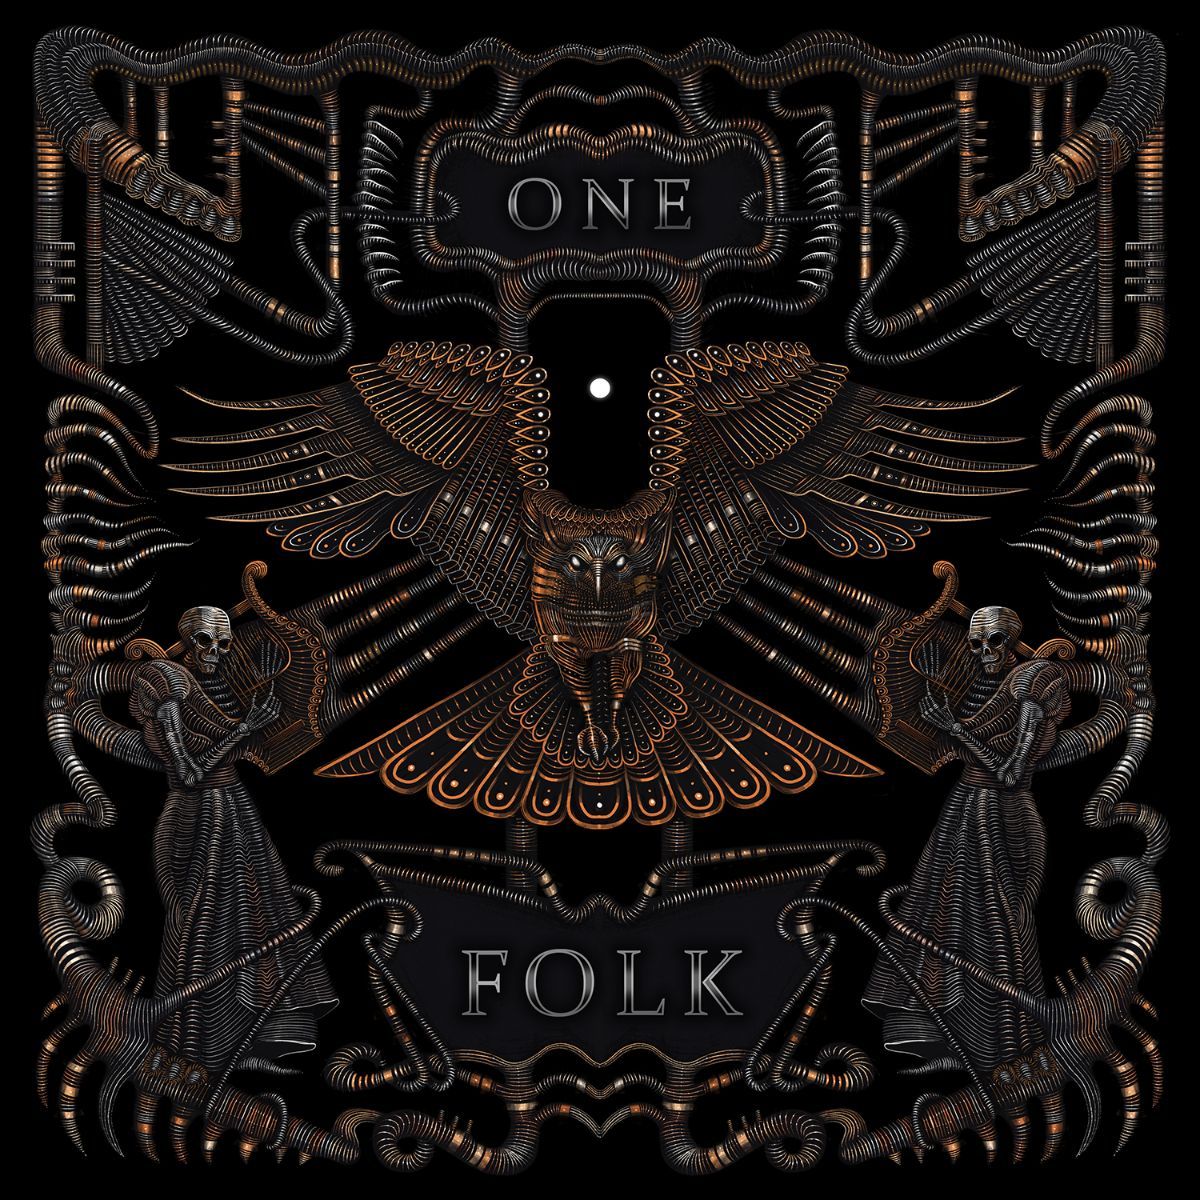 'One Folk'-Single online gestellt